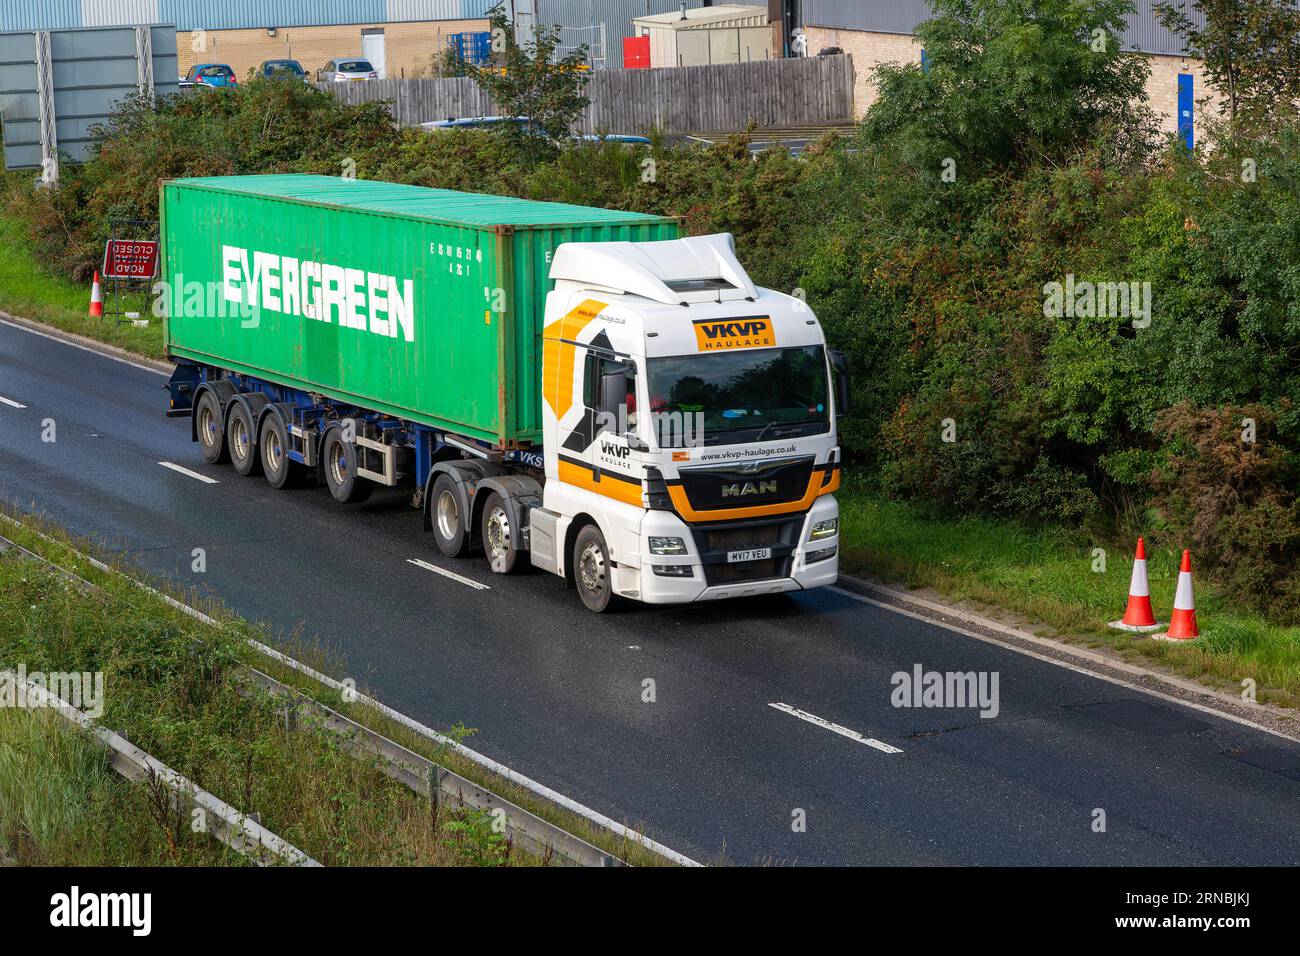 VKVP Haulage MAN lorry Evergreen container, A12 dual carriageway main road, Martlesham, Suffolk, England, UK Stock Photo